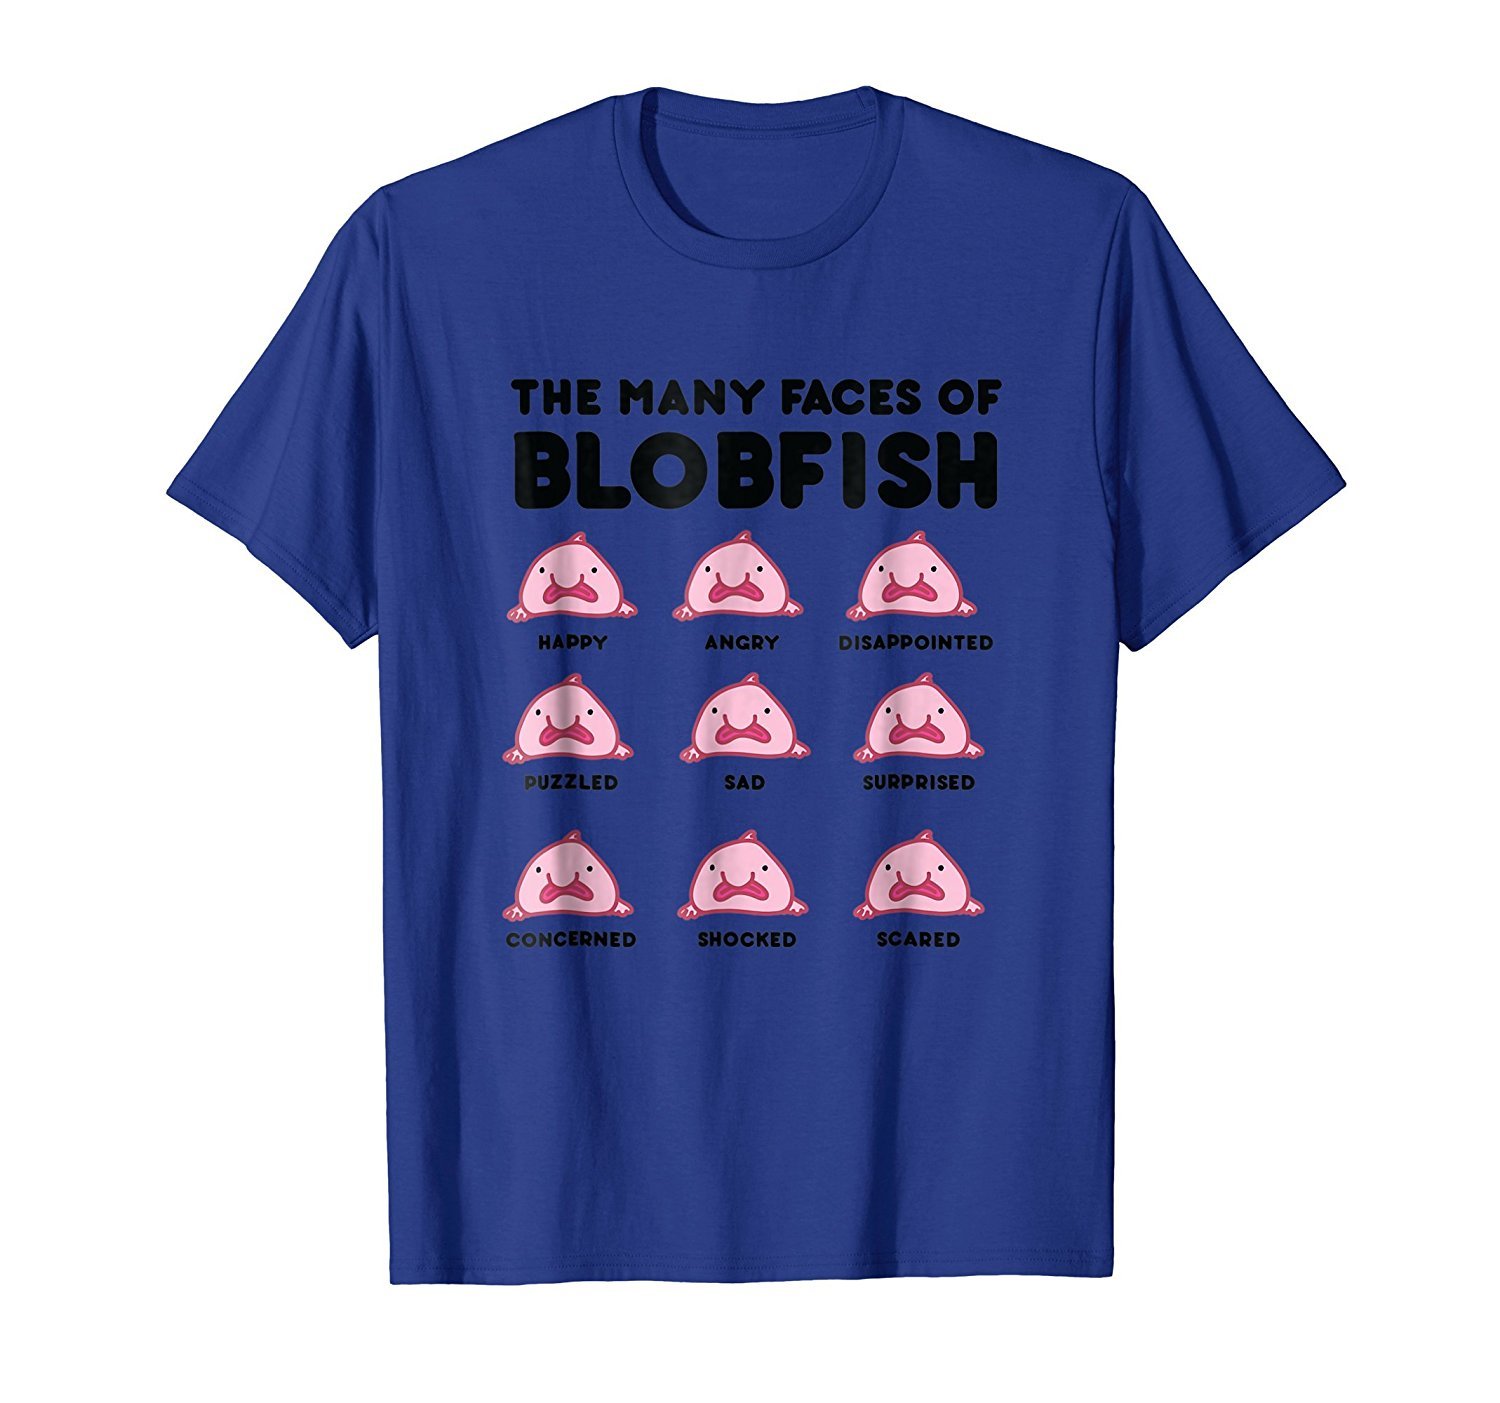 The Many Faces of Blobfish Shirt